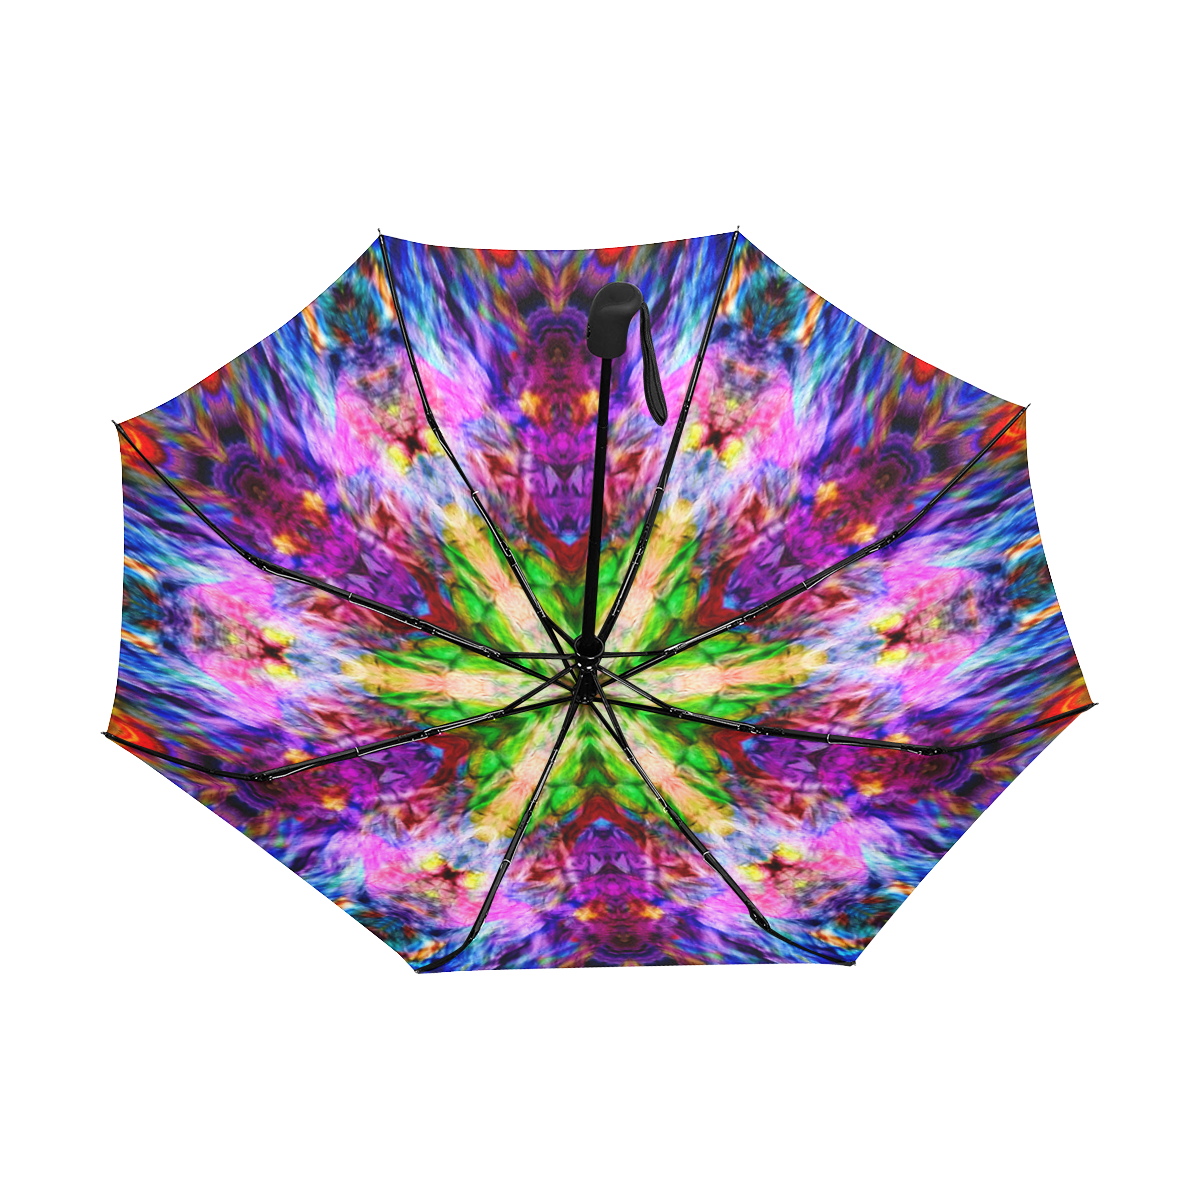 Multi-colored Crochet Anti-UV Auto-Foldable Umbrella (Underside Printing) (U06)